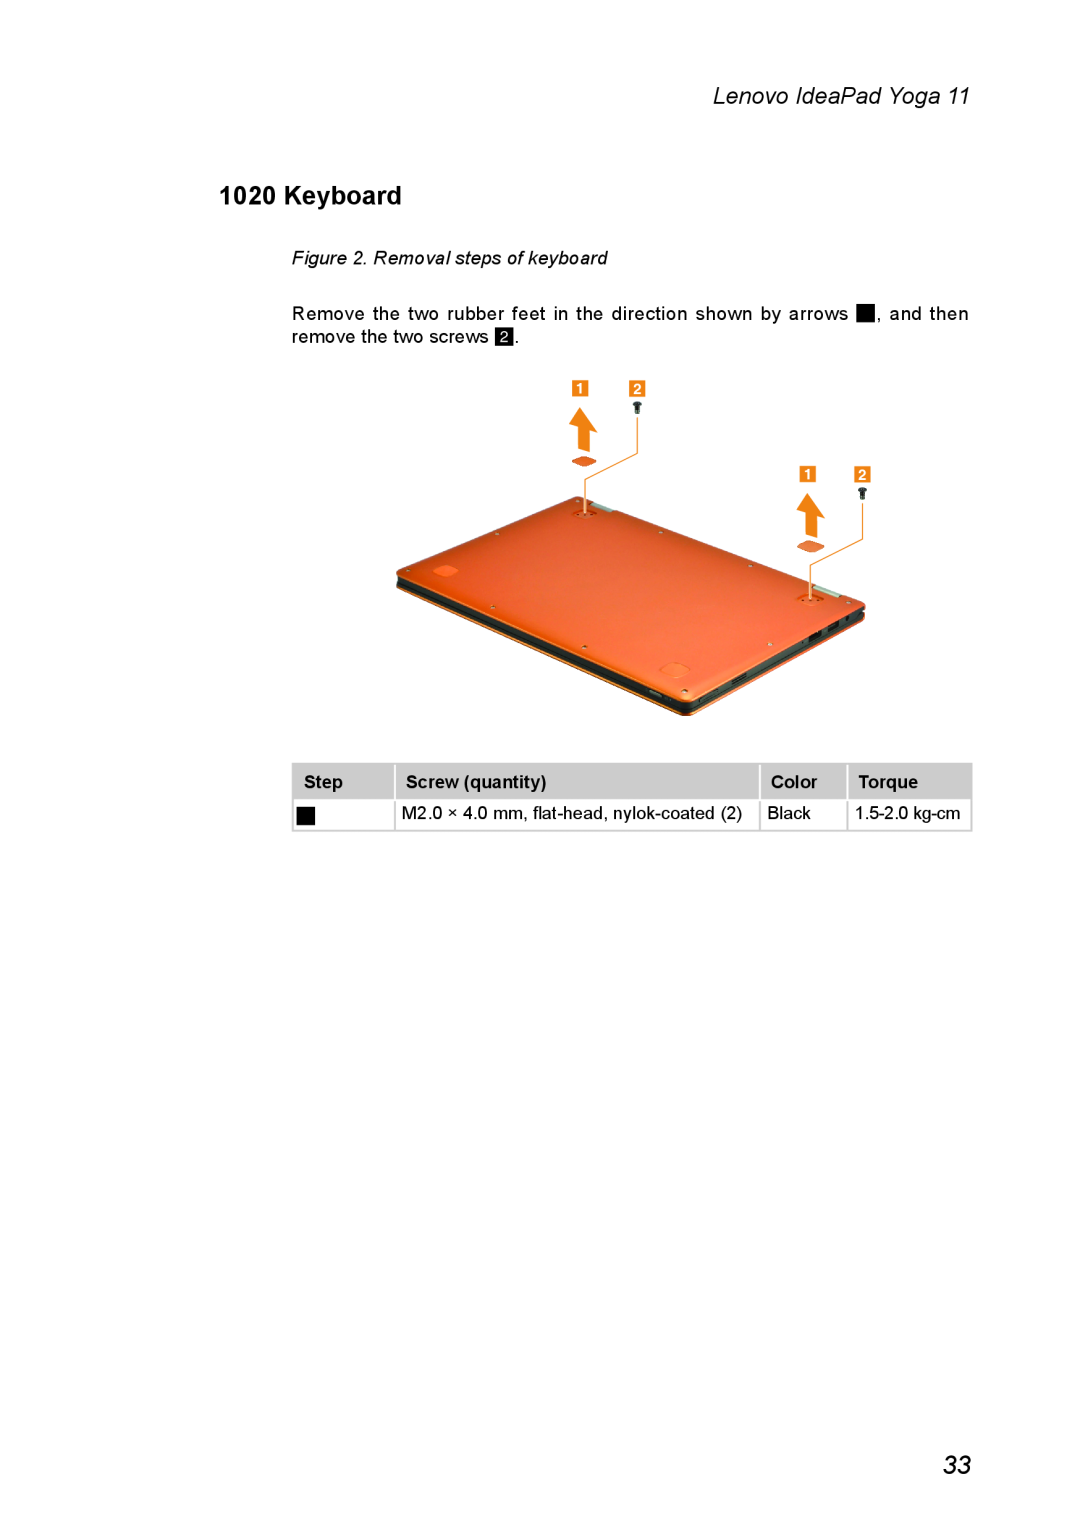 Lenovo 11 manual Keyboard, Removal steps of keyboard, Lenovo IdeaPad Yoga, Step, Screw quantity, Color, Torque 